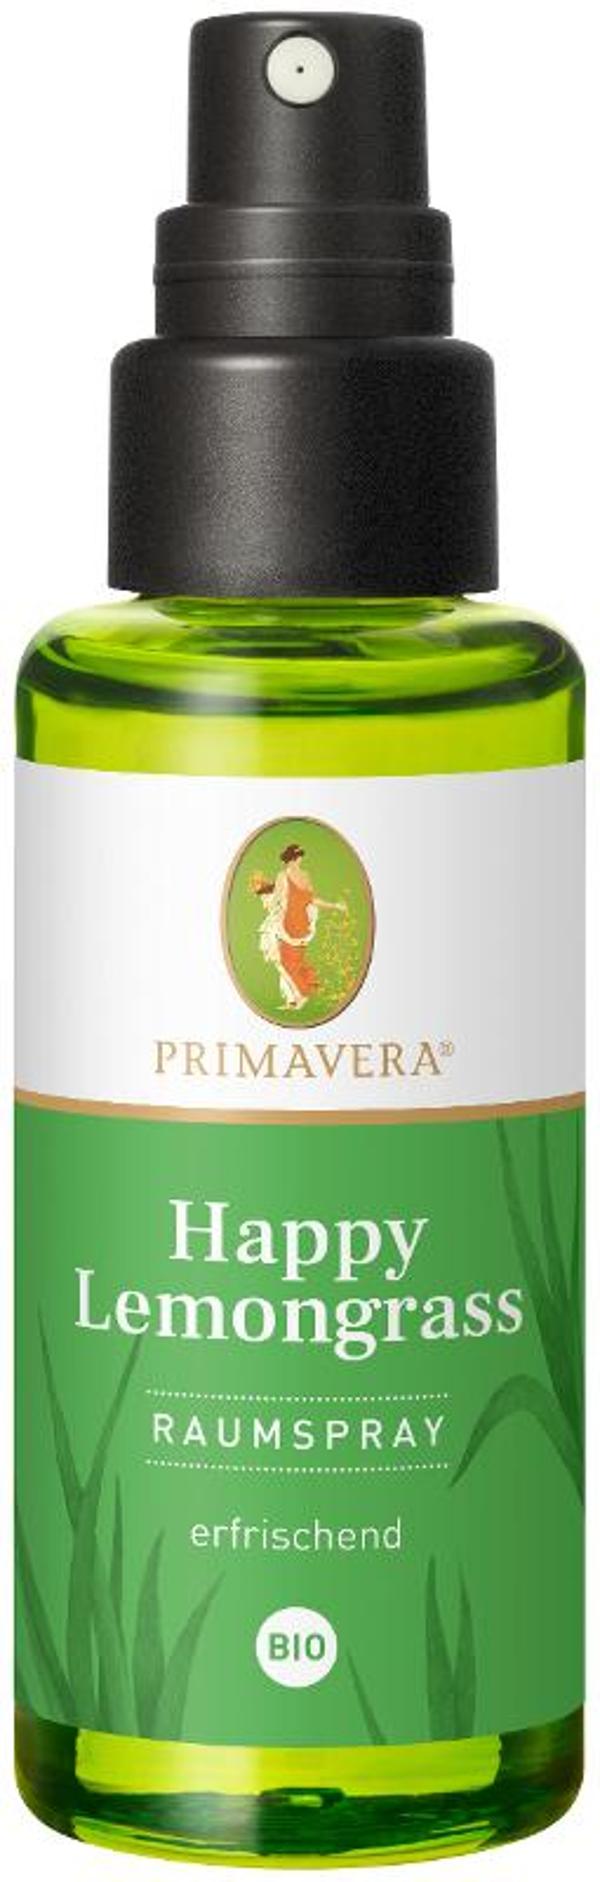 Produktfoto zu Happy Lemongrass Raumspray